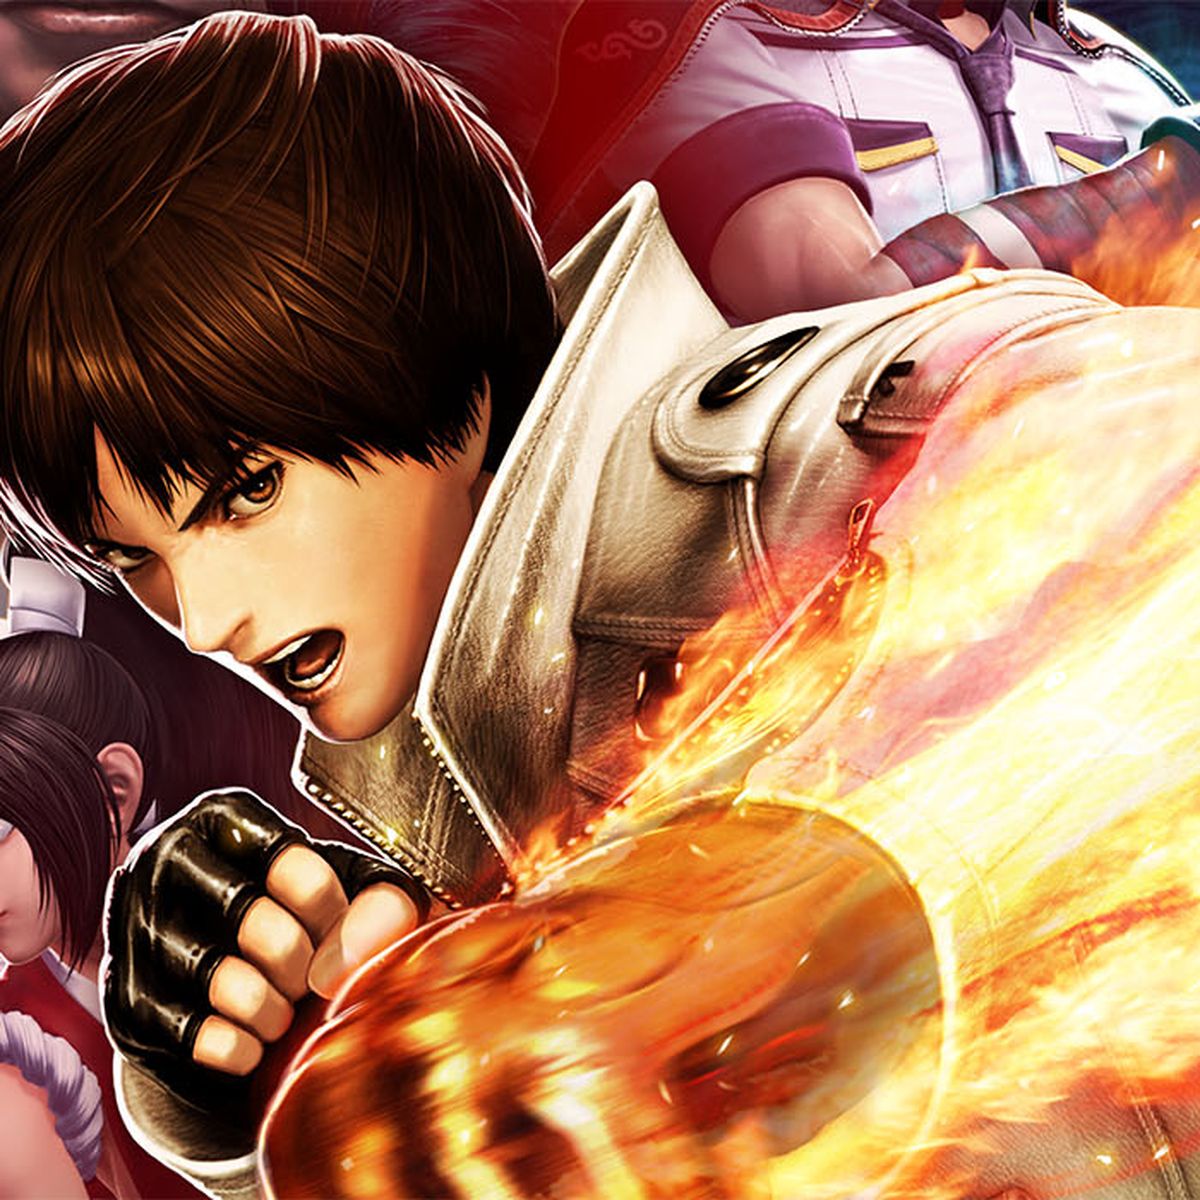 Análise: The King of Fighters XIV (PS4) inova sem fugir das raízes